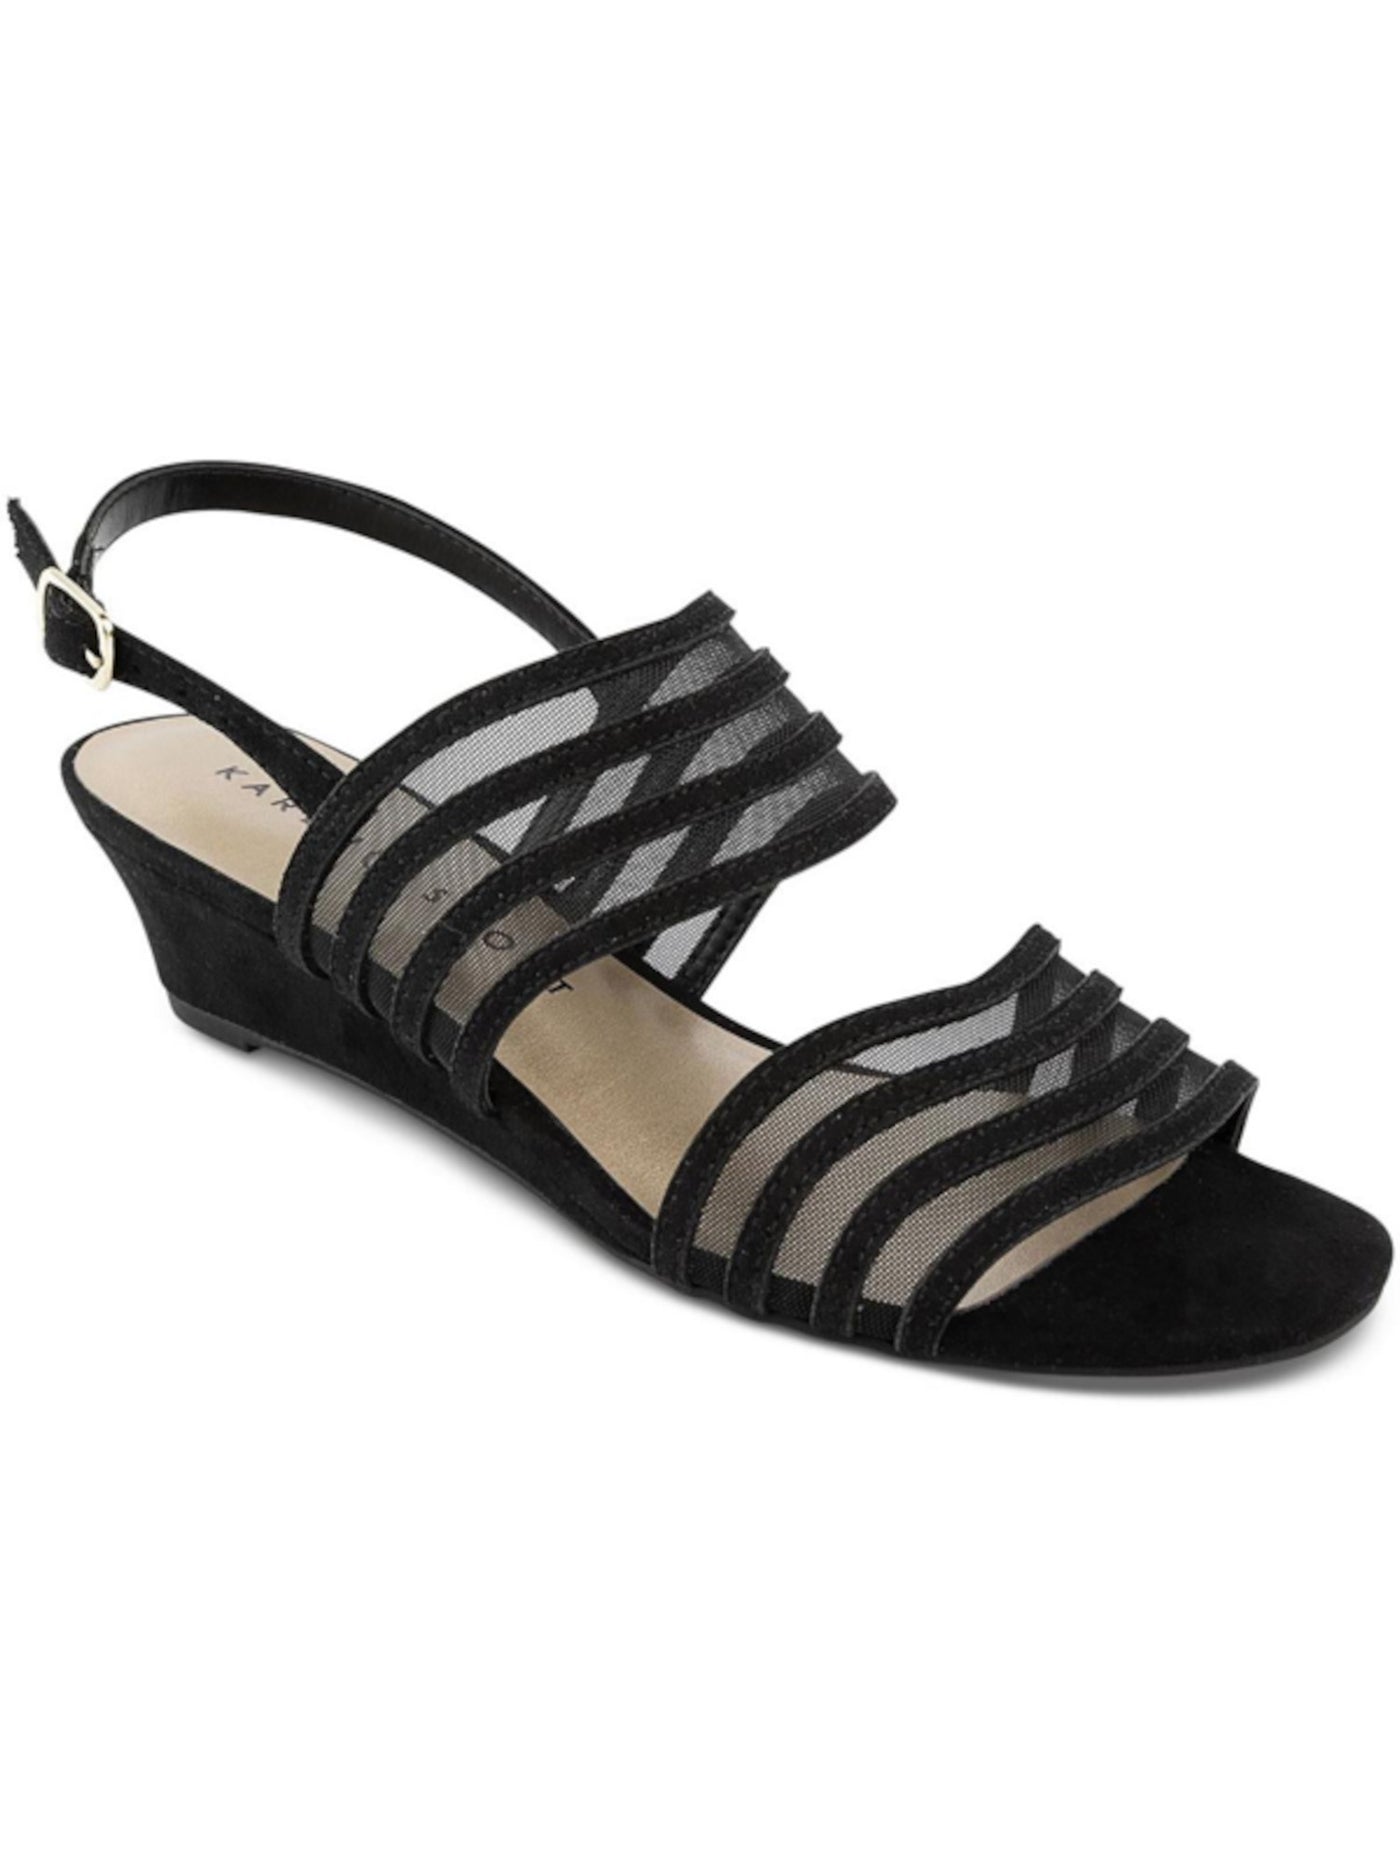 KAREN SCOTT Womens Black Mesh Padded Adjustable Diraa Round Toe Wedge Buckle Dress Sandals Shoes 8 M